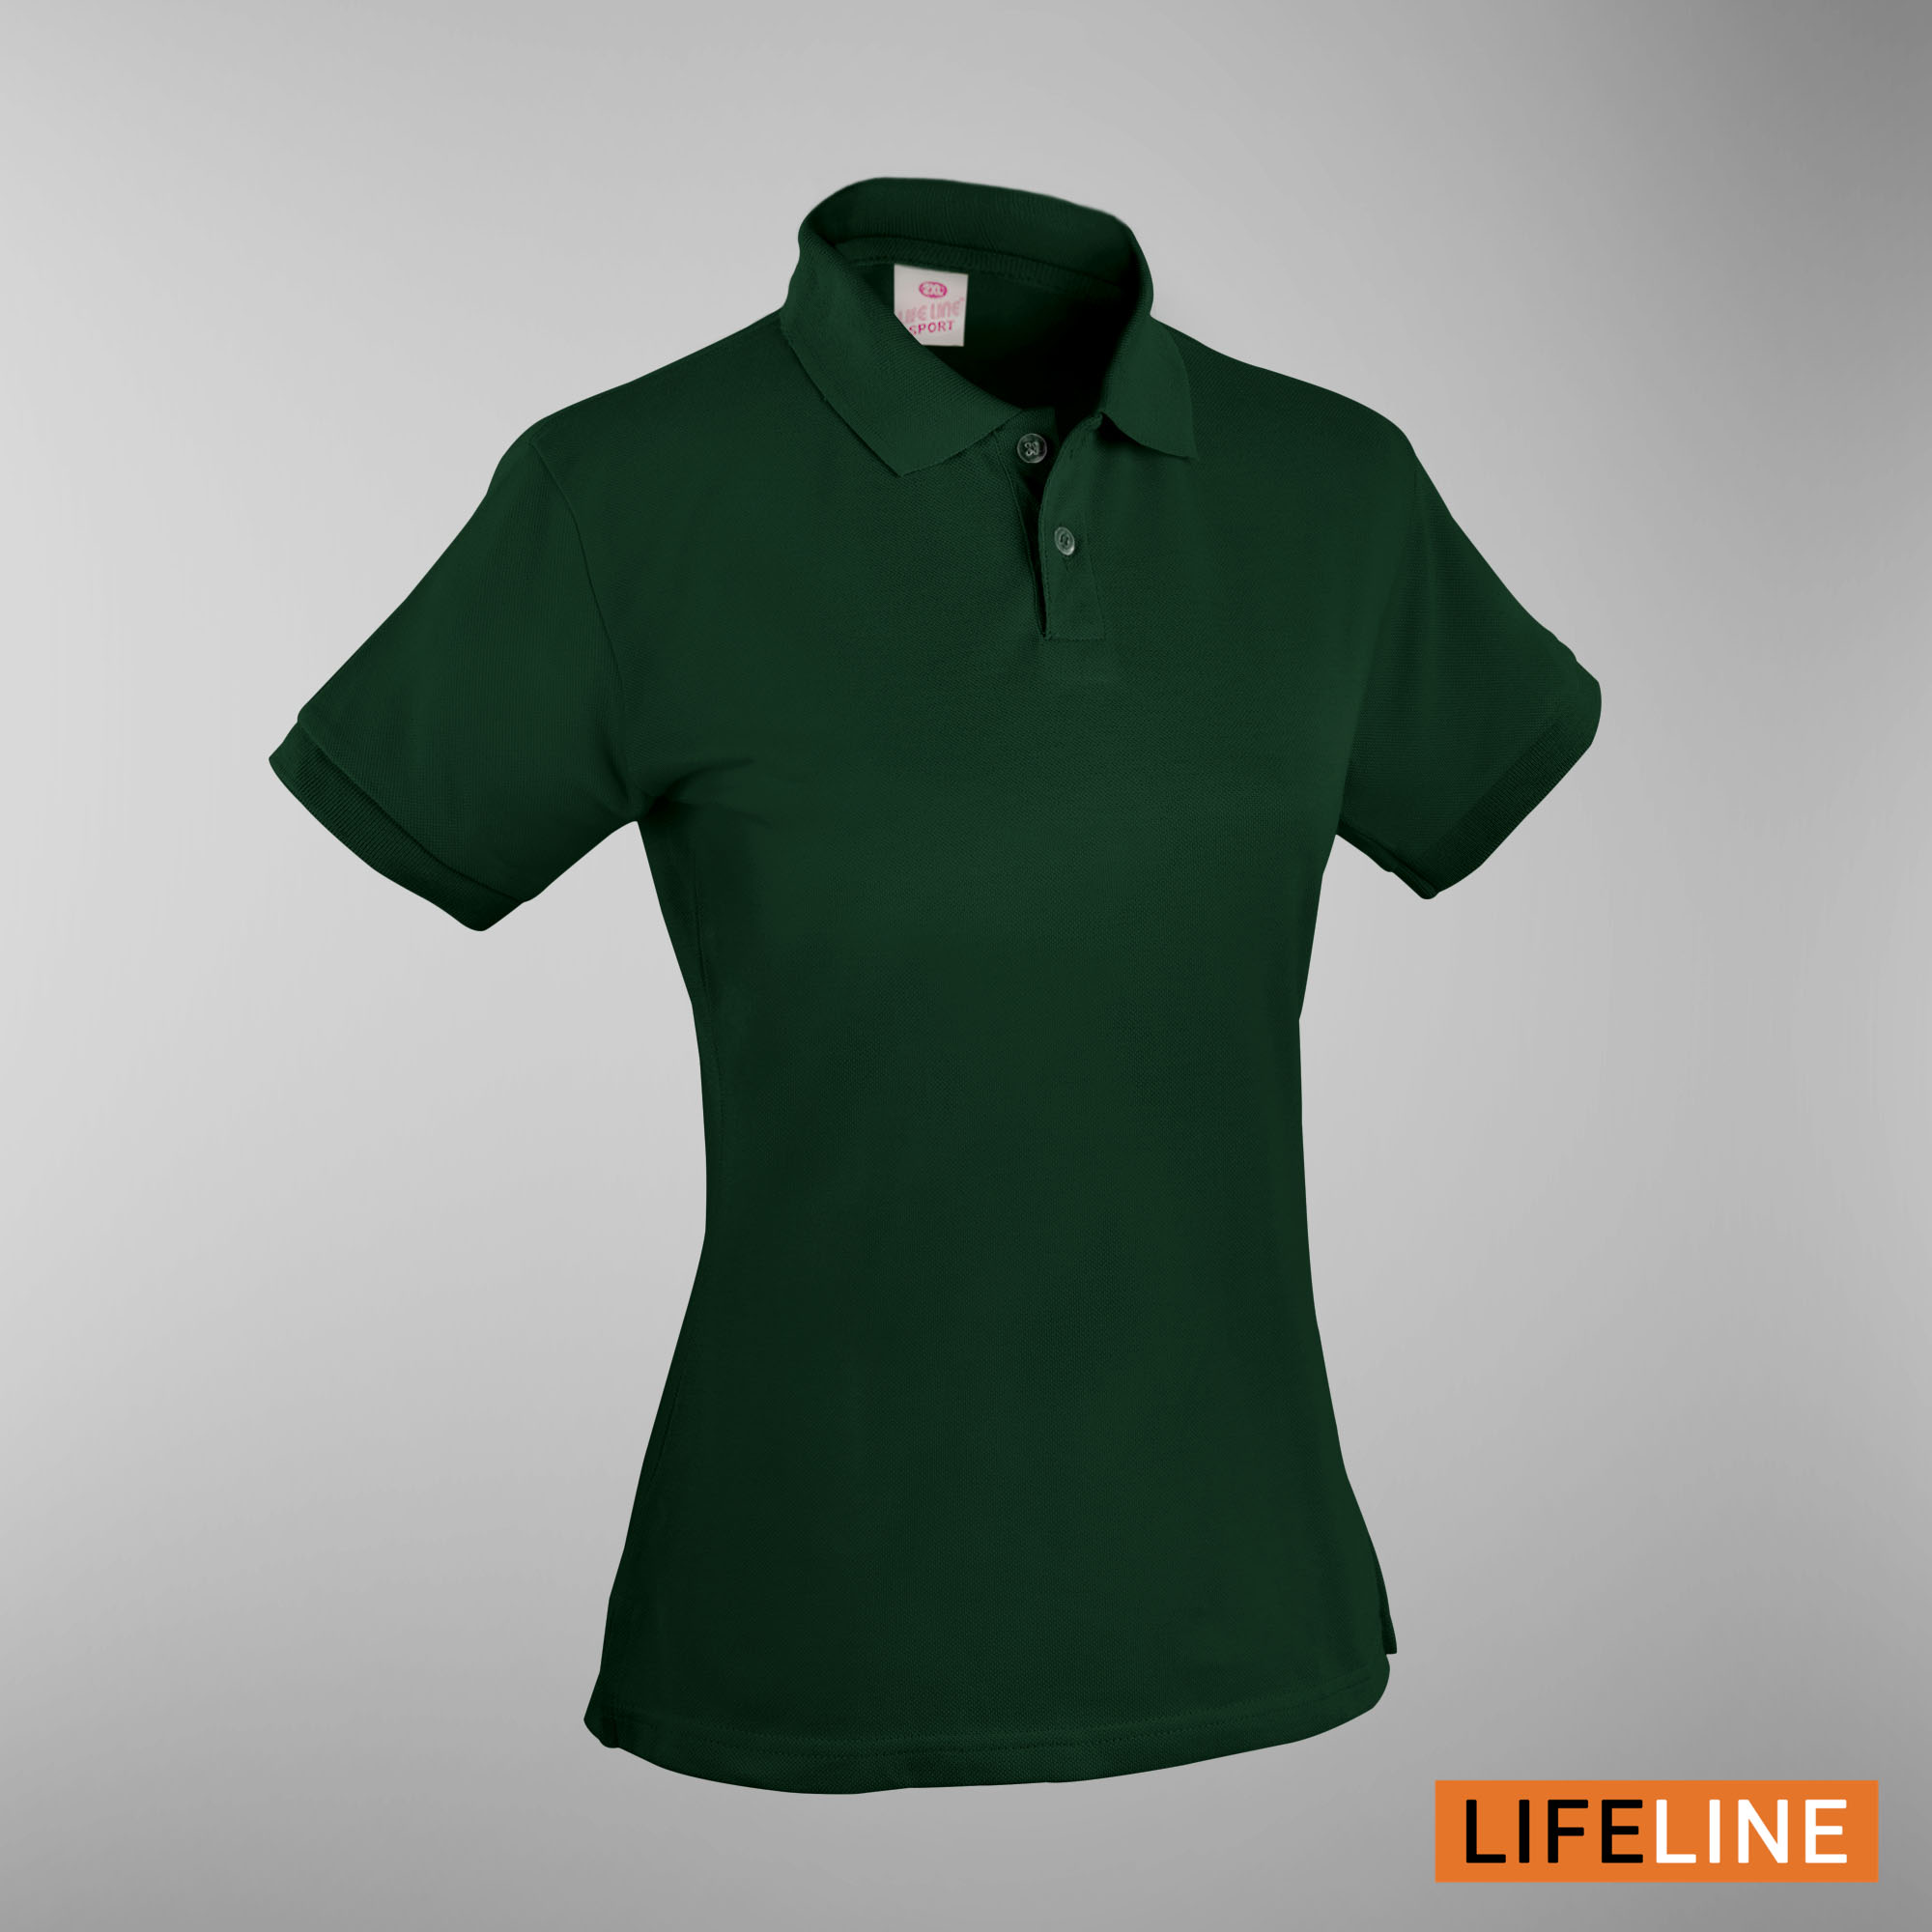 Lifeline Ladies’ Poloshirt (Moss Green) (Petite Sizes)